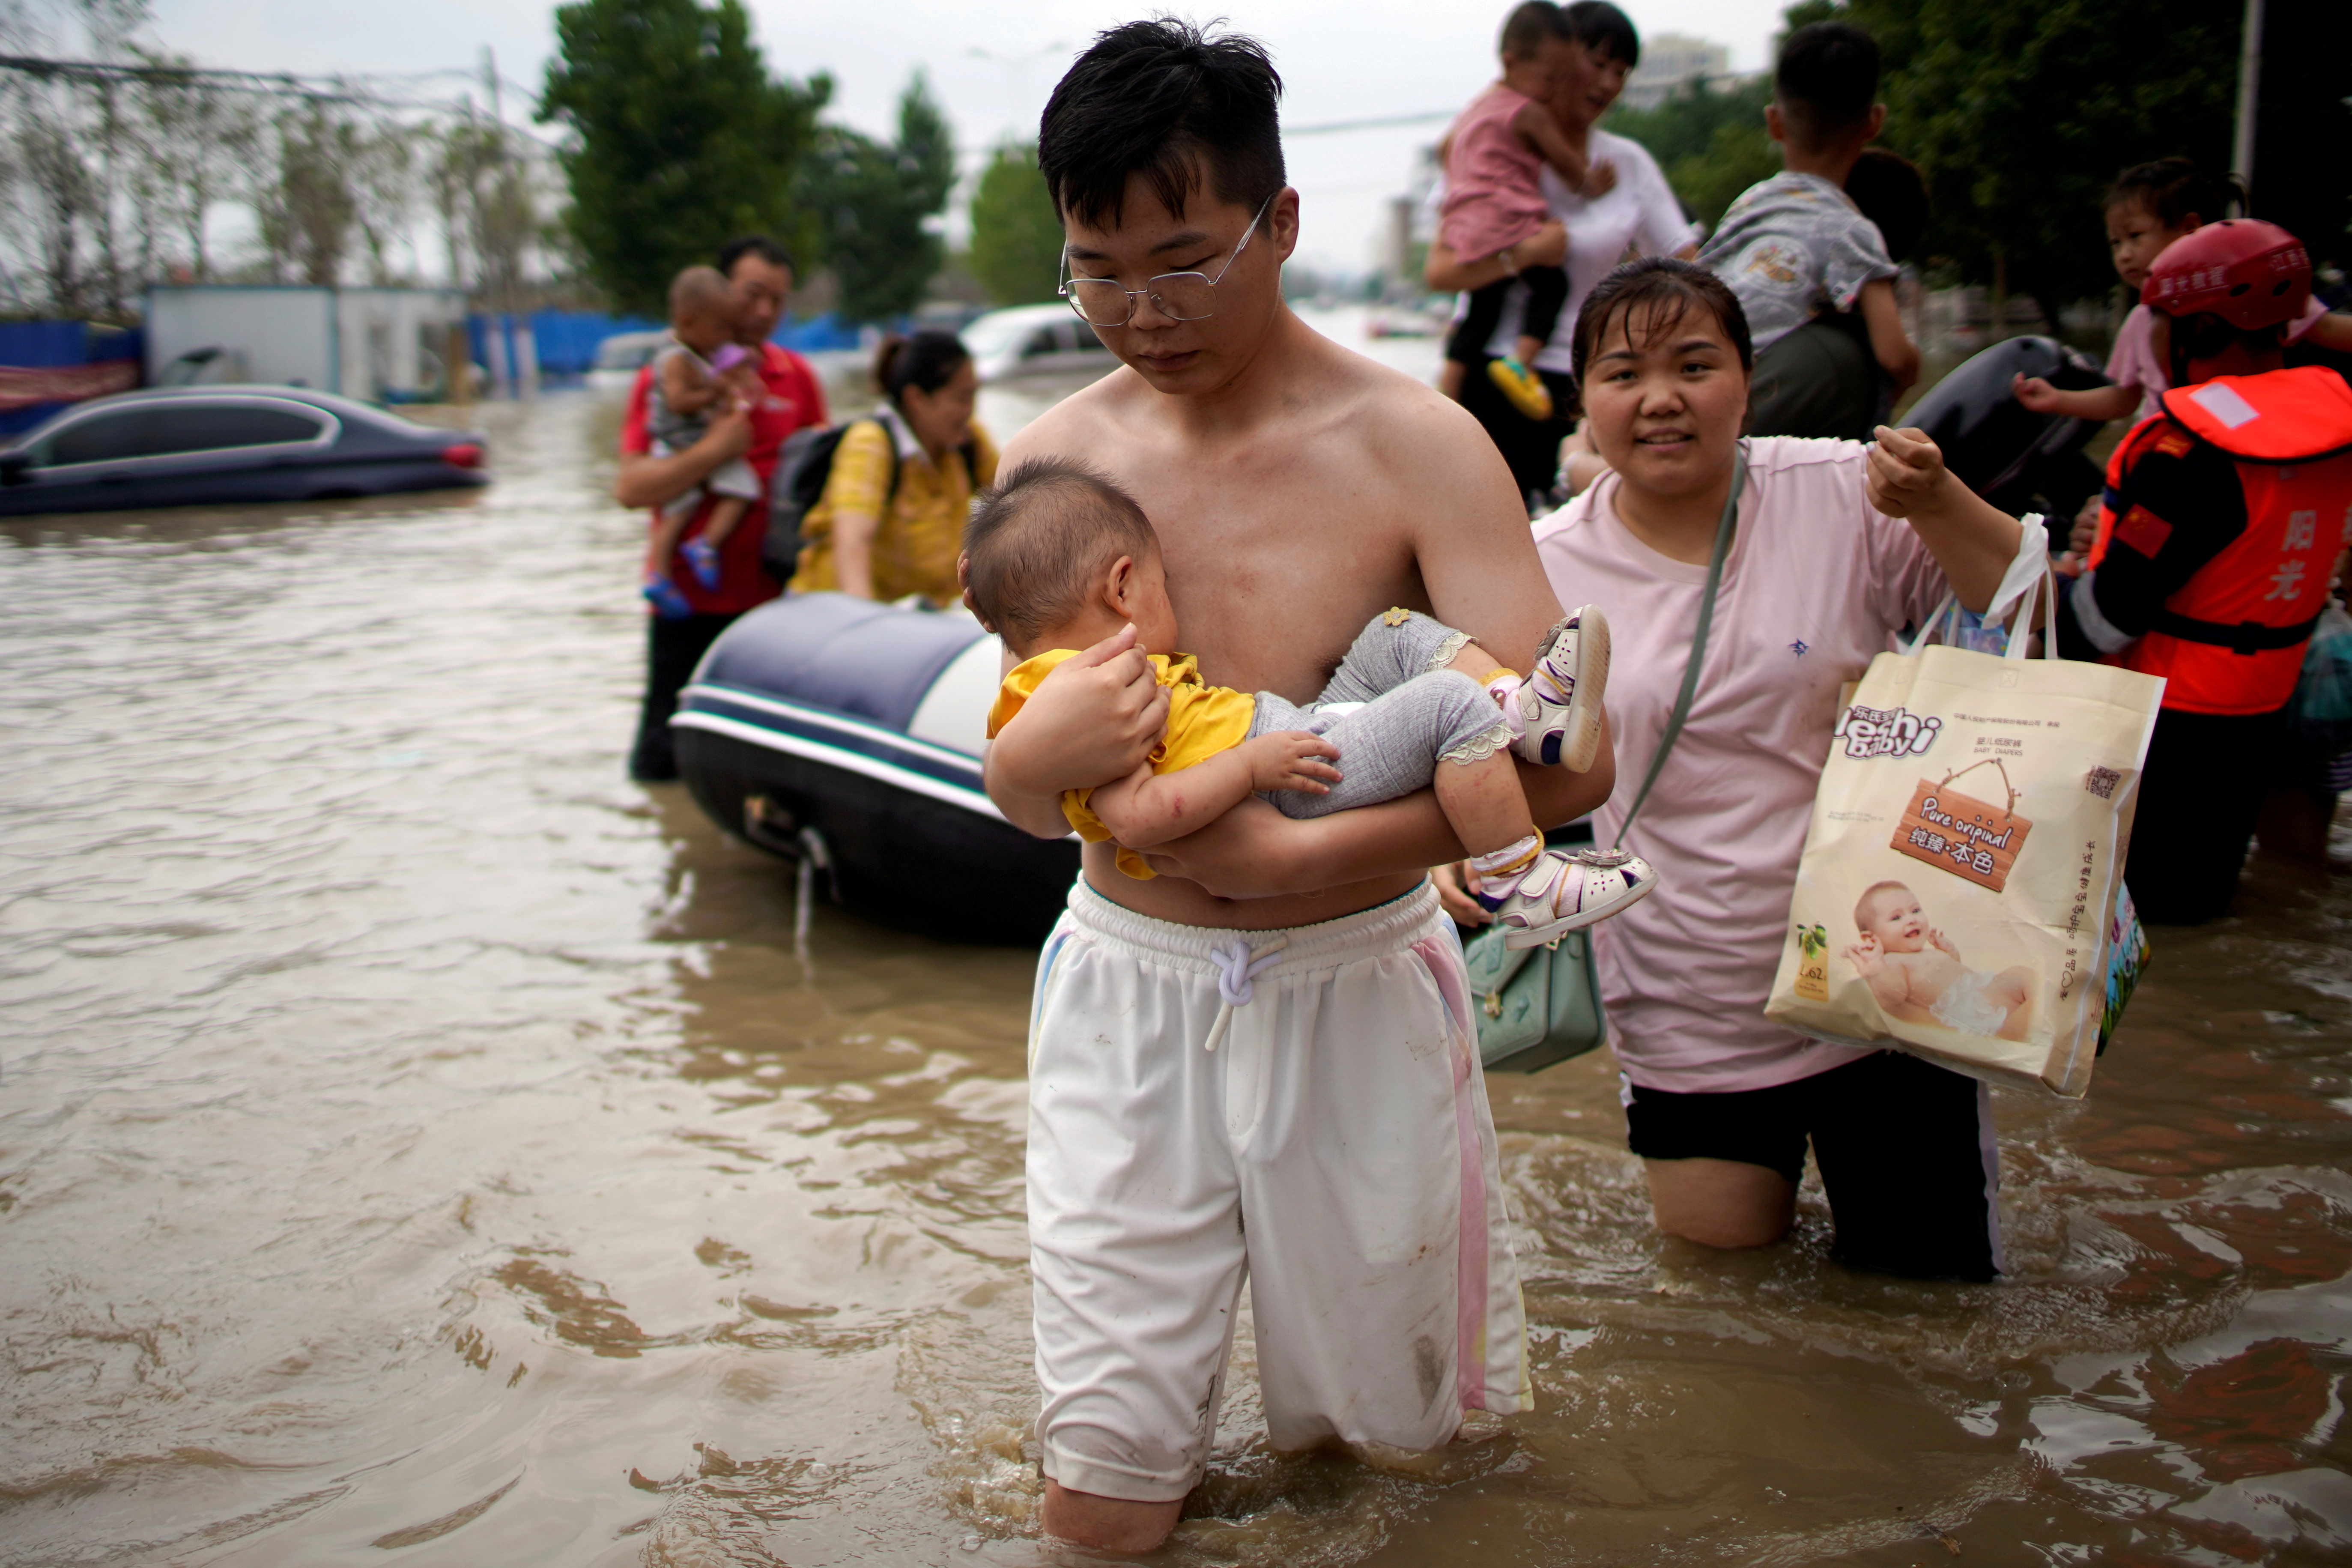 Man holding a baby wades through a flooded road following heavy rainfall in Zhengzhou